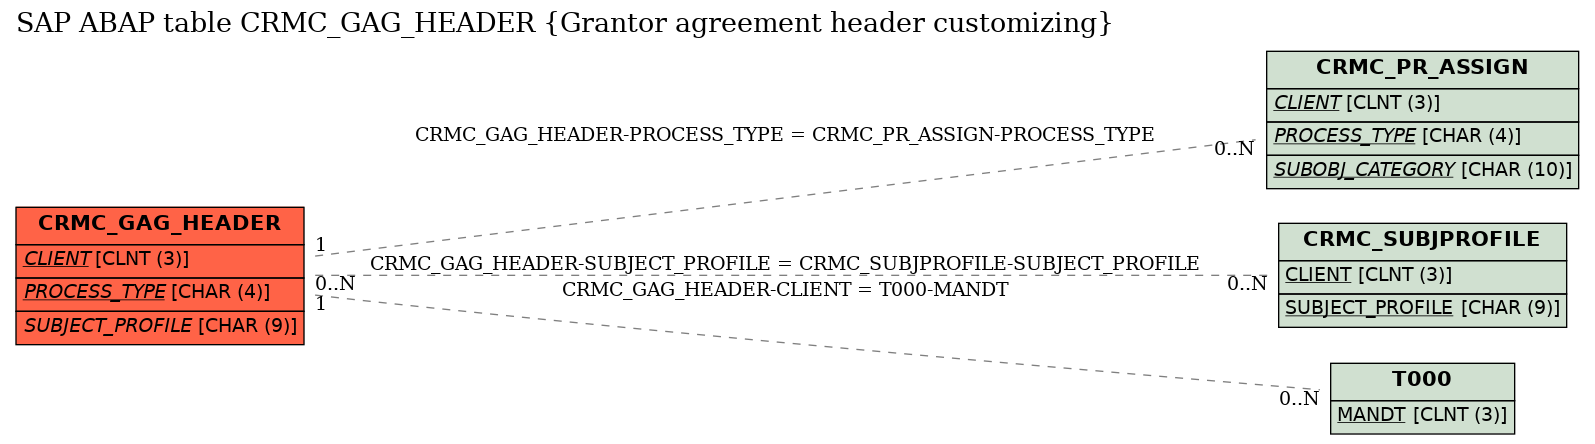 E-R Diagram for table CRMC_GAG_HEADER (Grantor agreement header customizing)